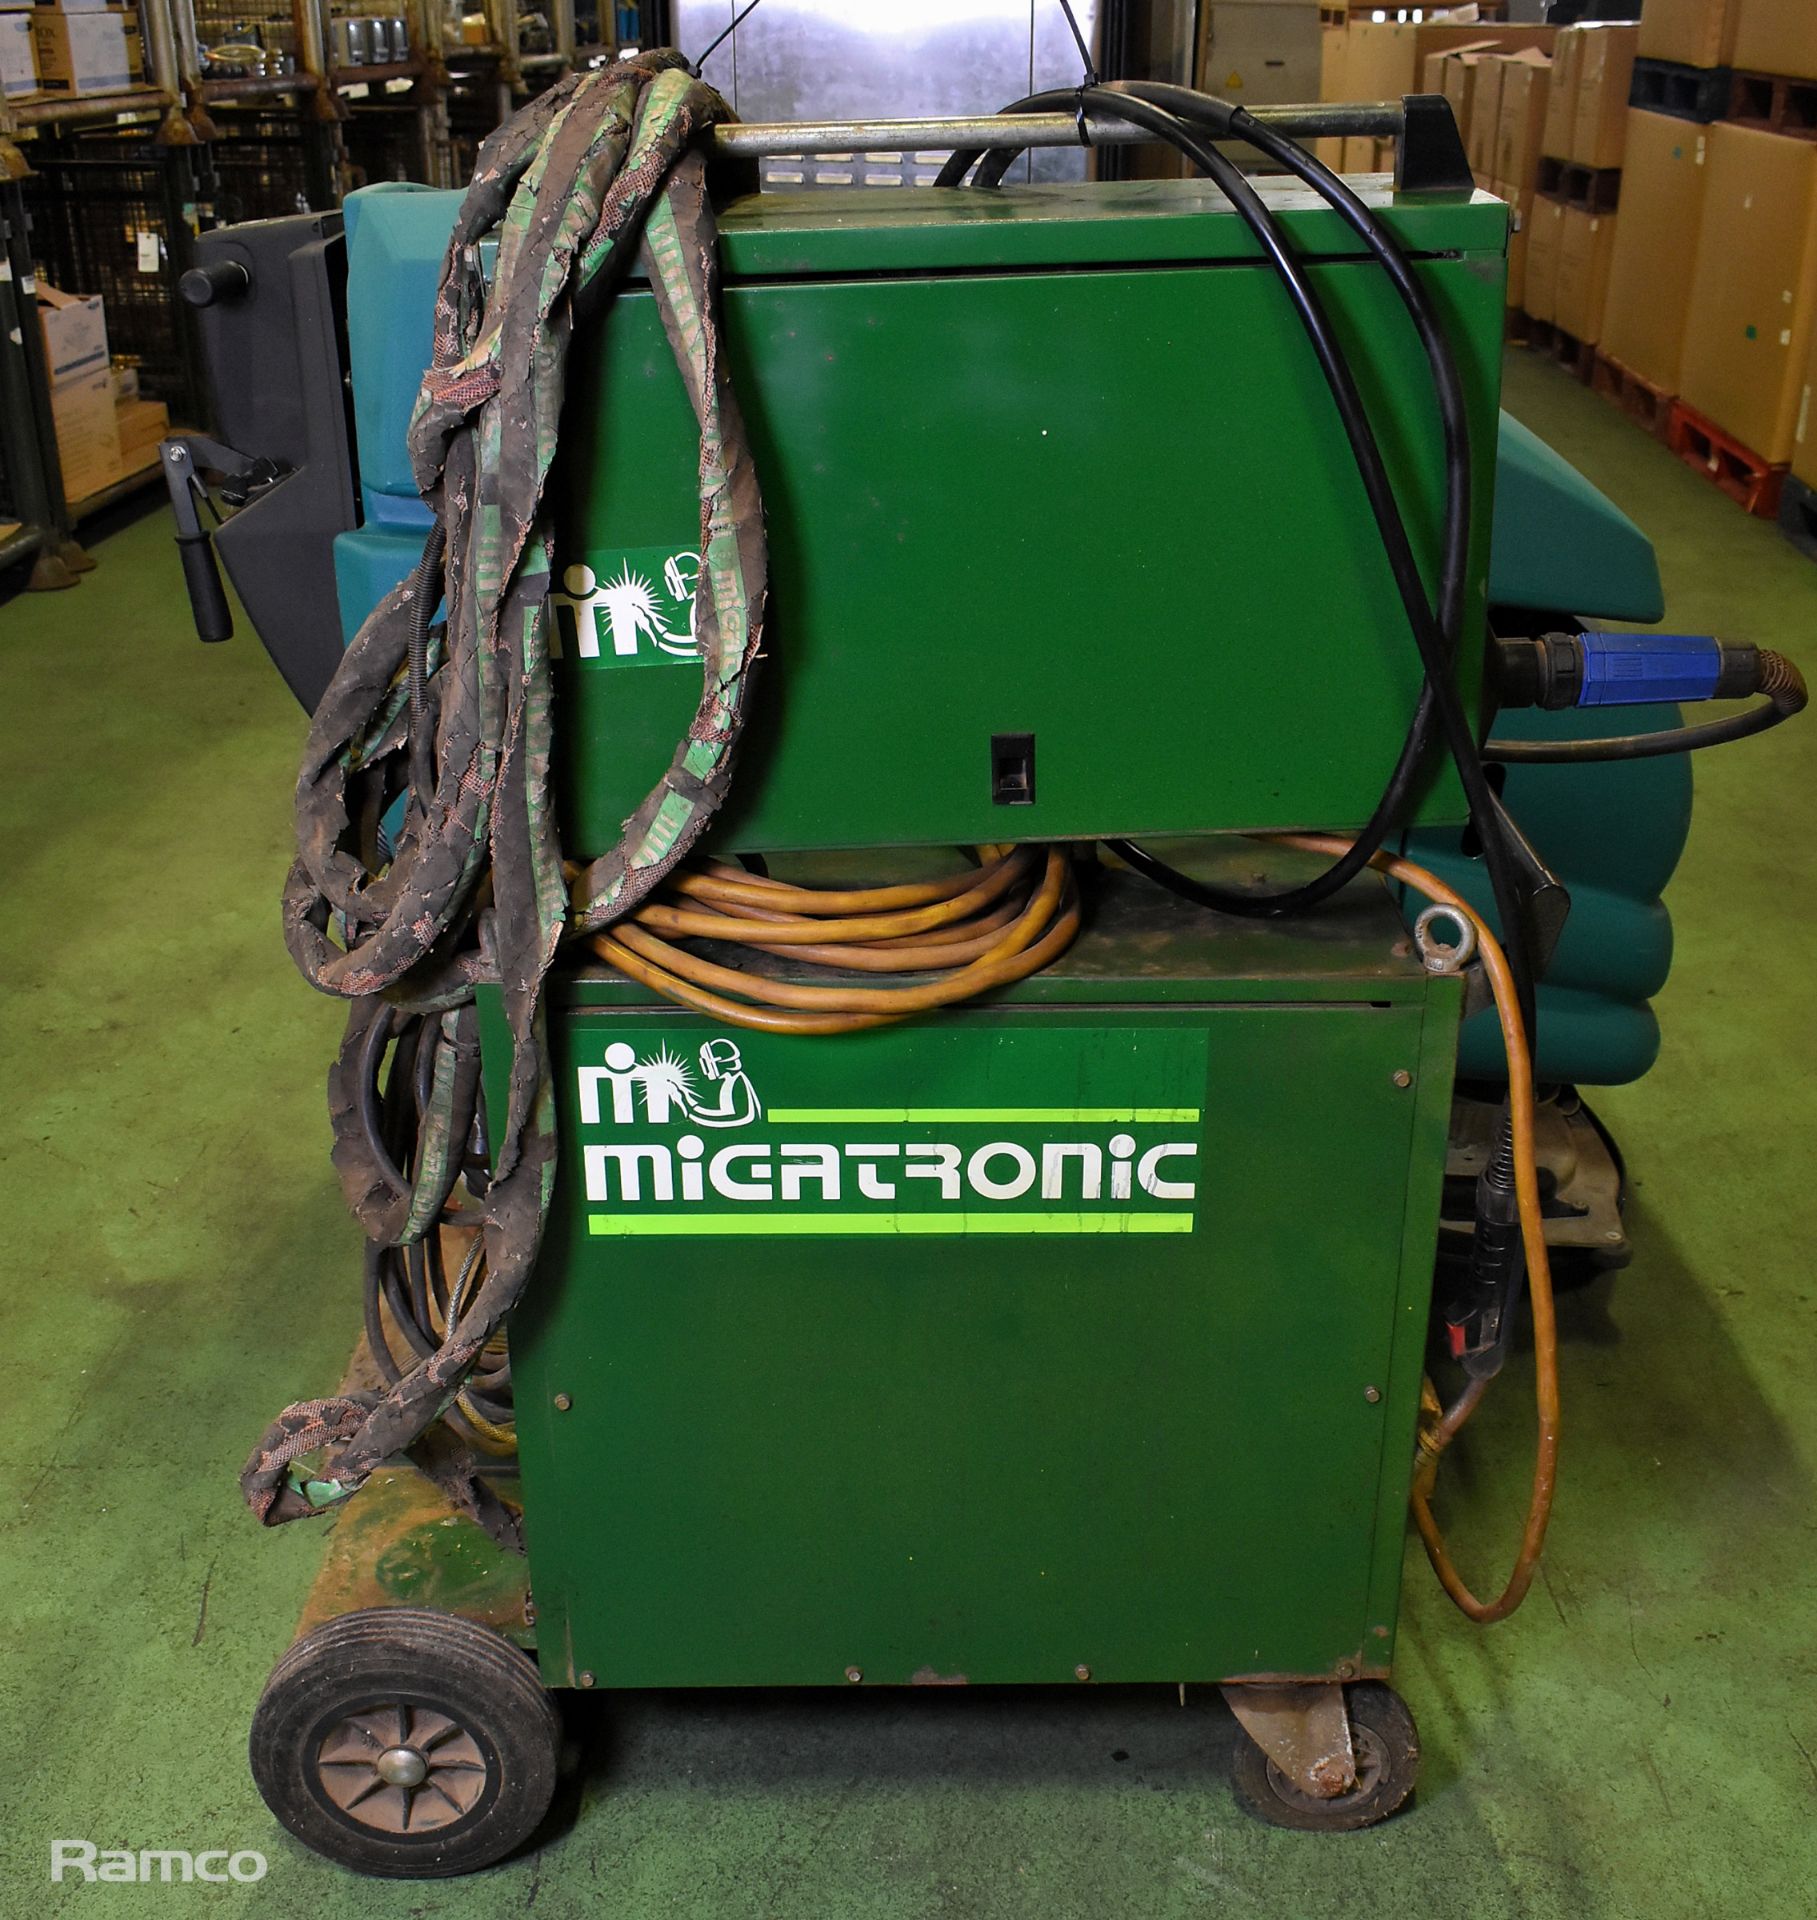 Migatronic DynaMig 335 mig welding machine - Image 4 of 6